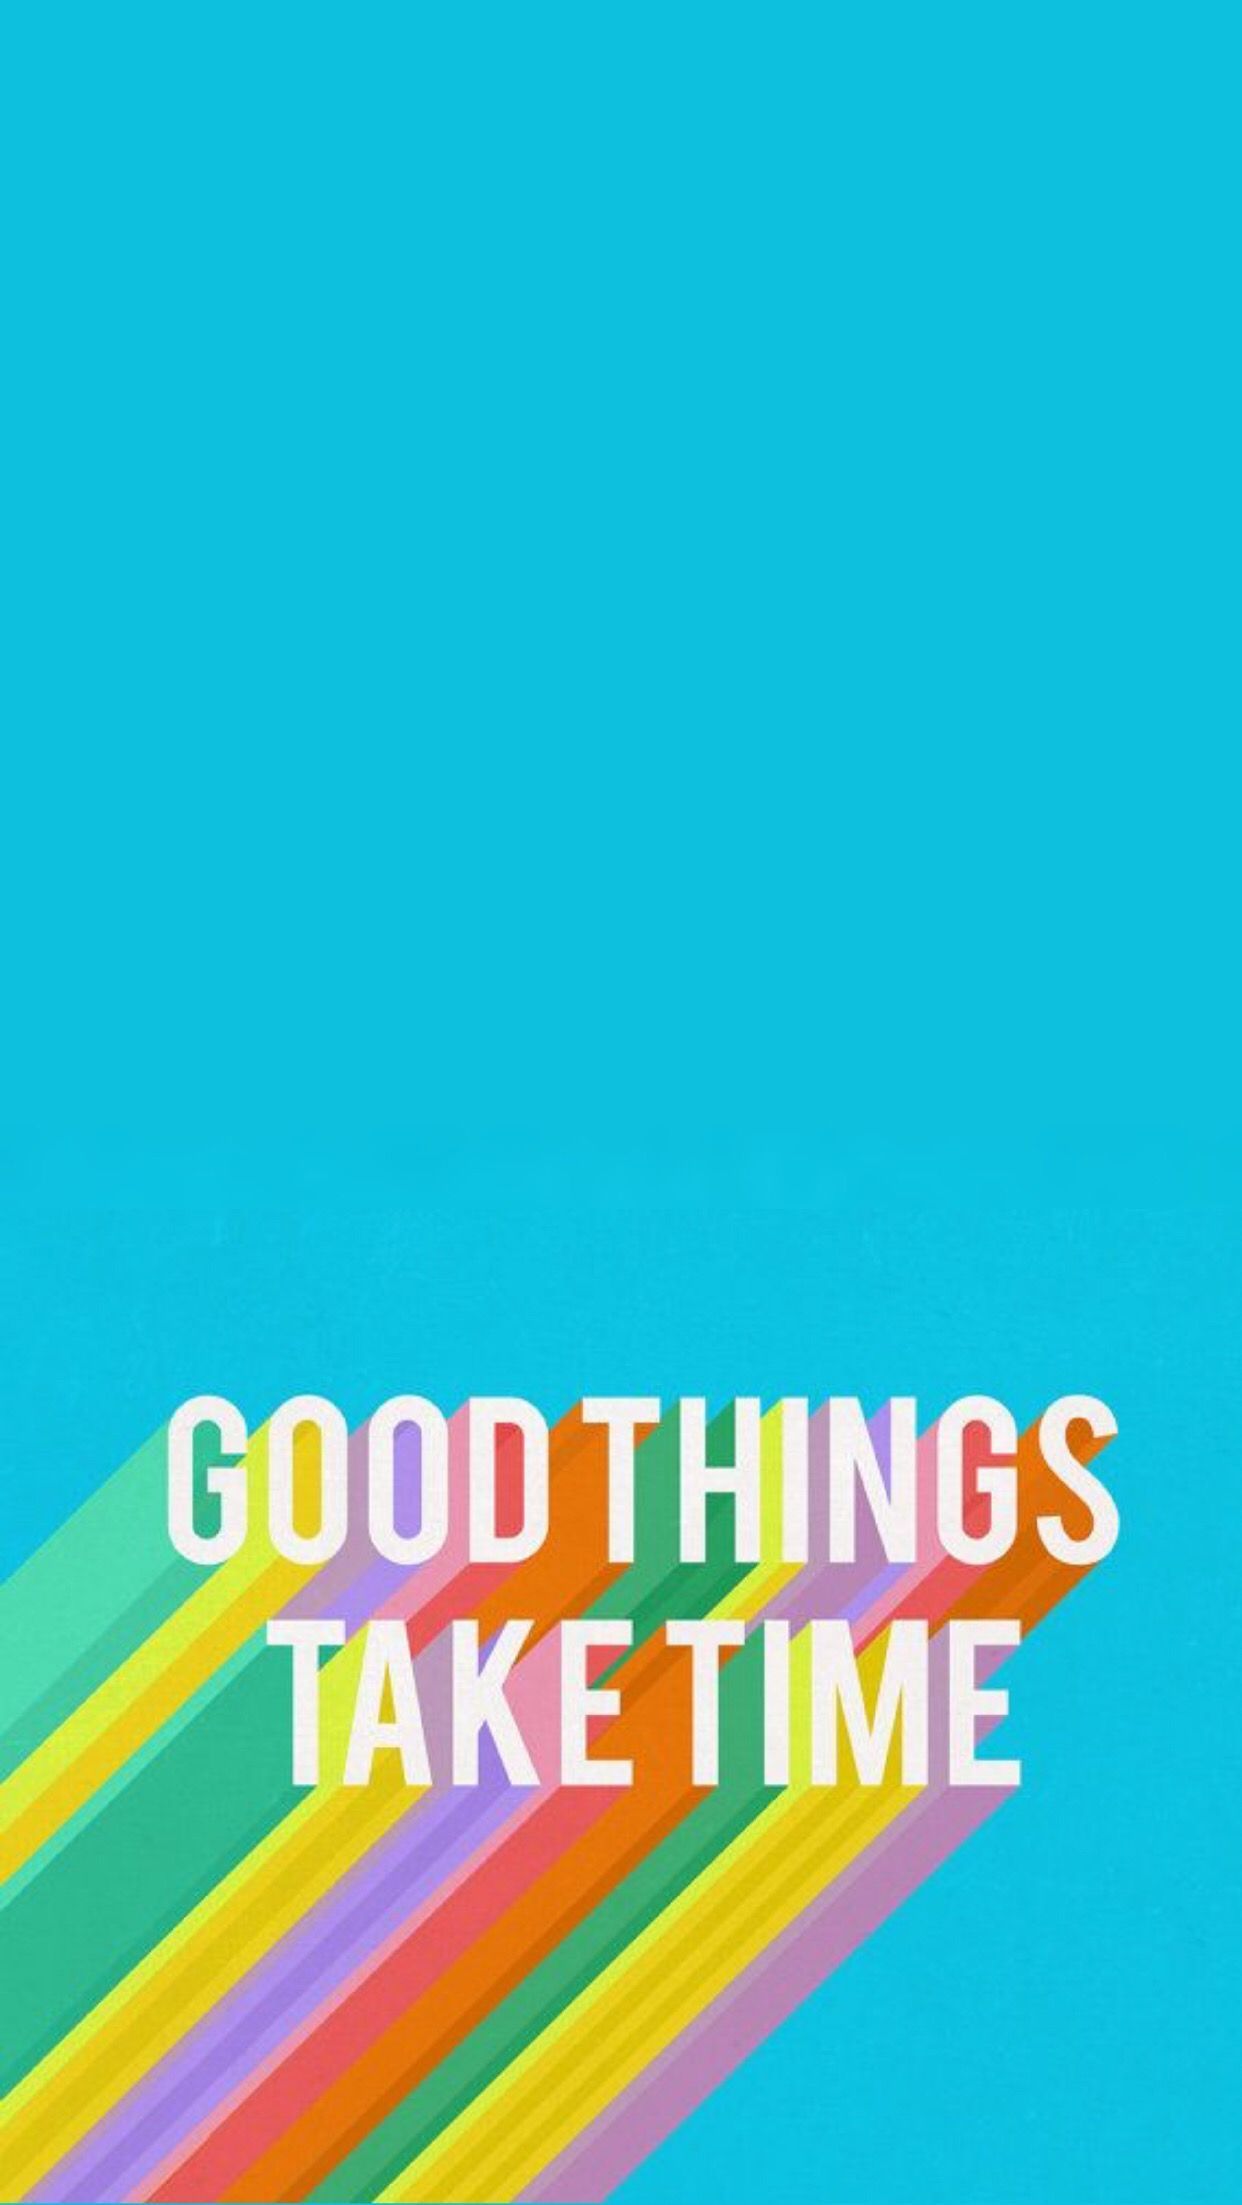 iPhone Wallpaper Good Things Take Time Blue Rainbow. Good things take time, Tumblr iphone wallpaper, iPhone wallpaper